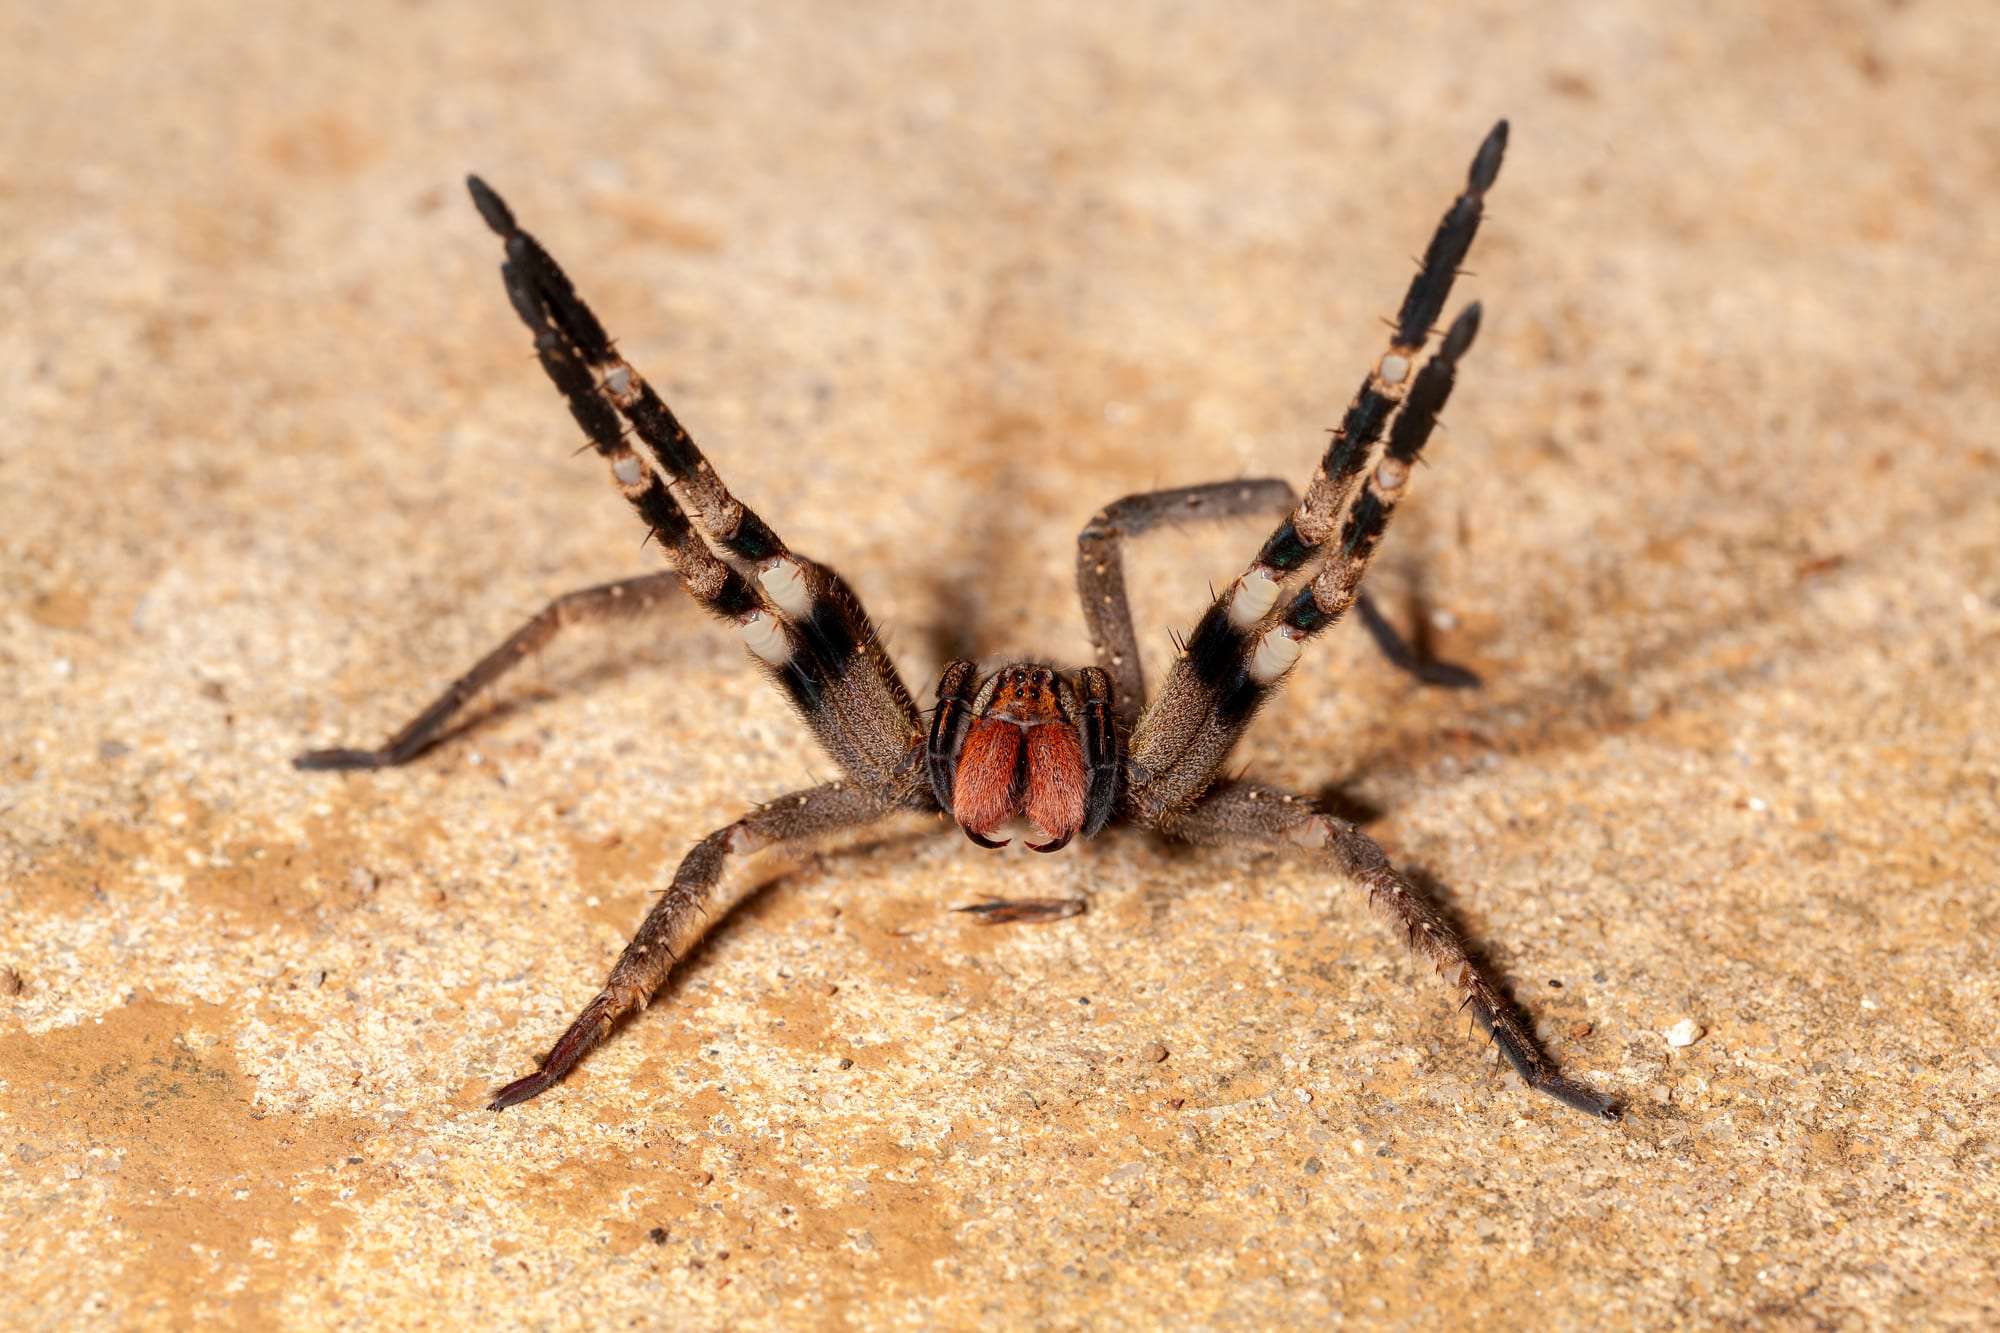 brazilian wandering spider bite fatal